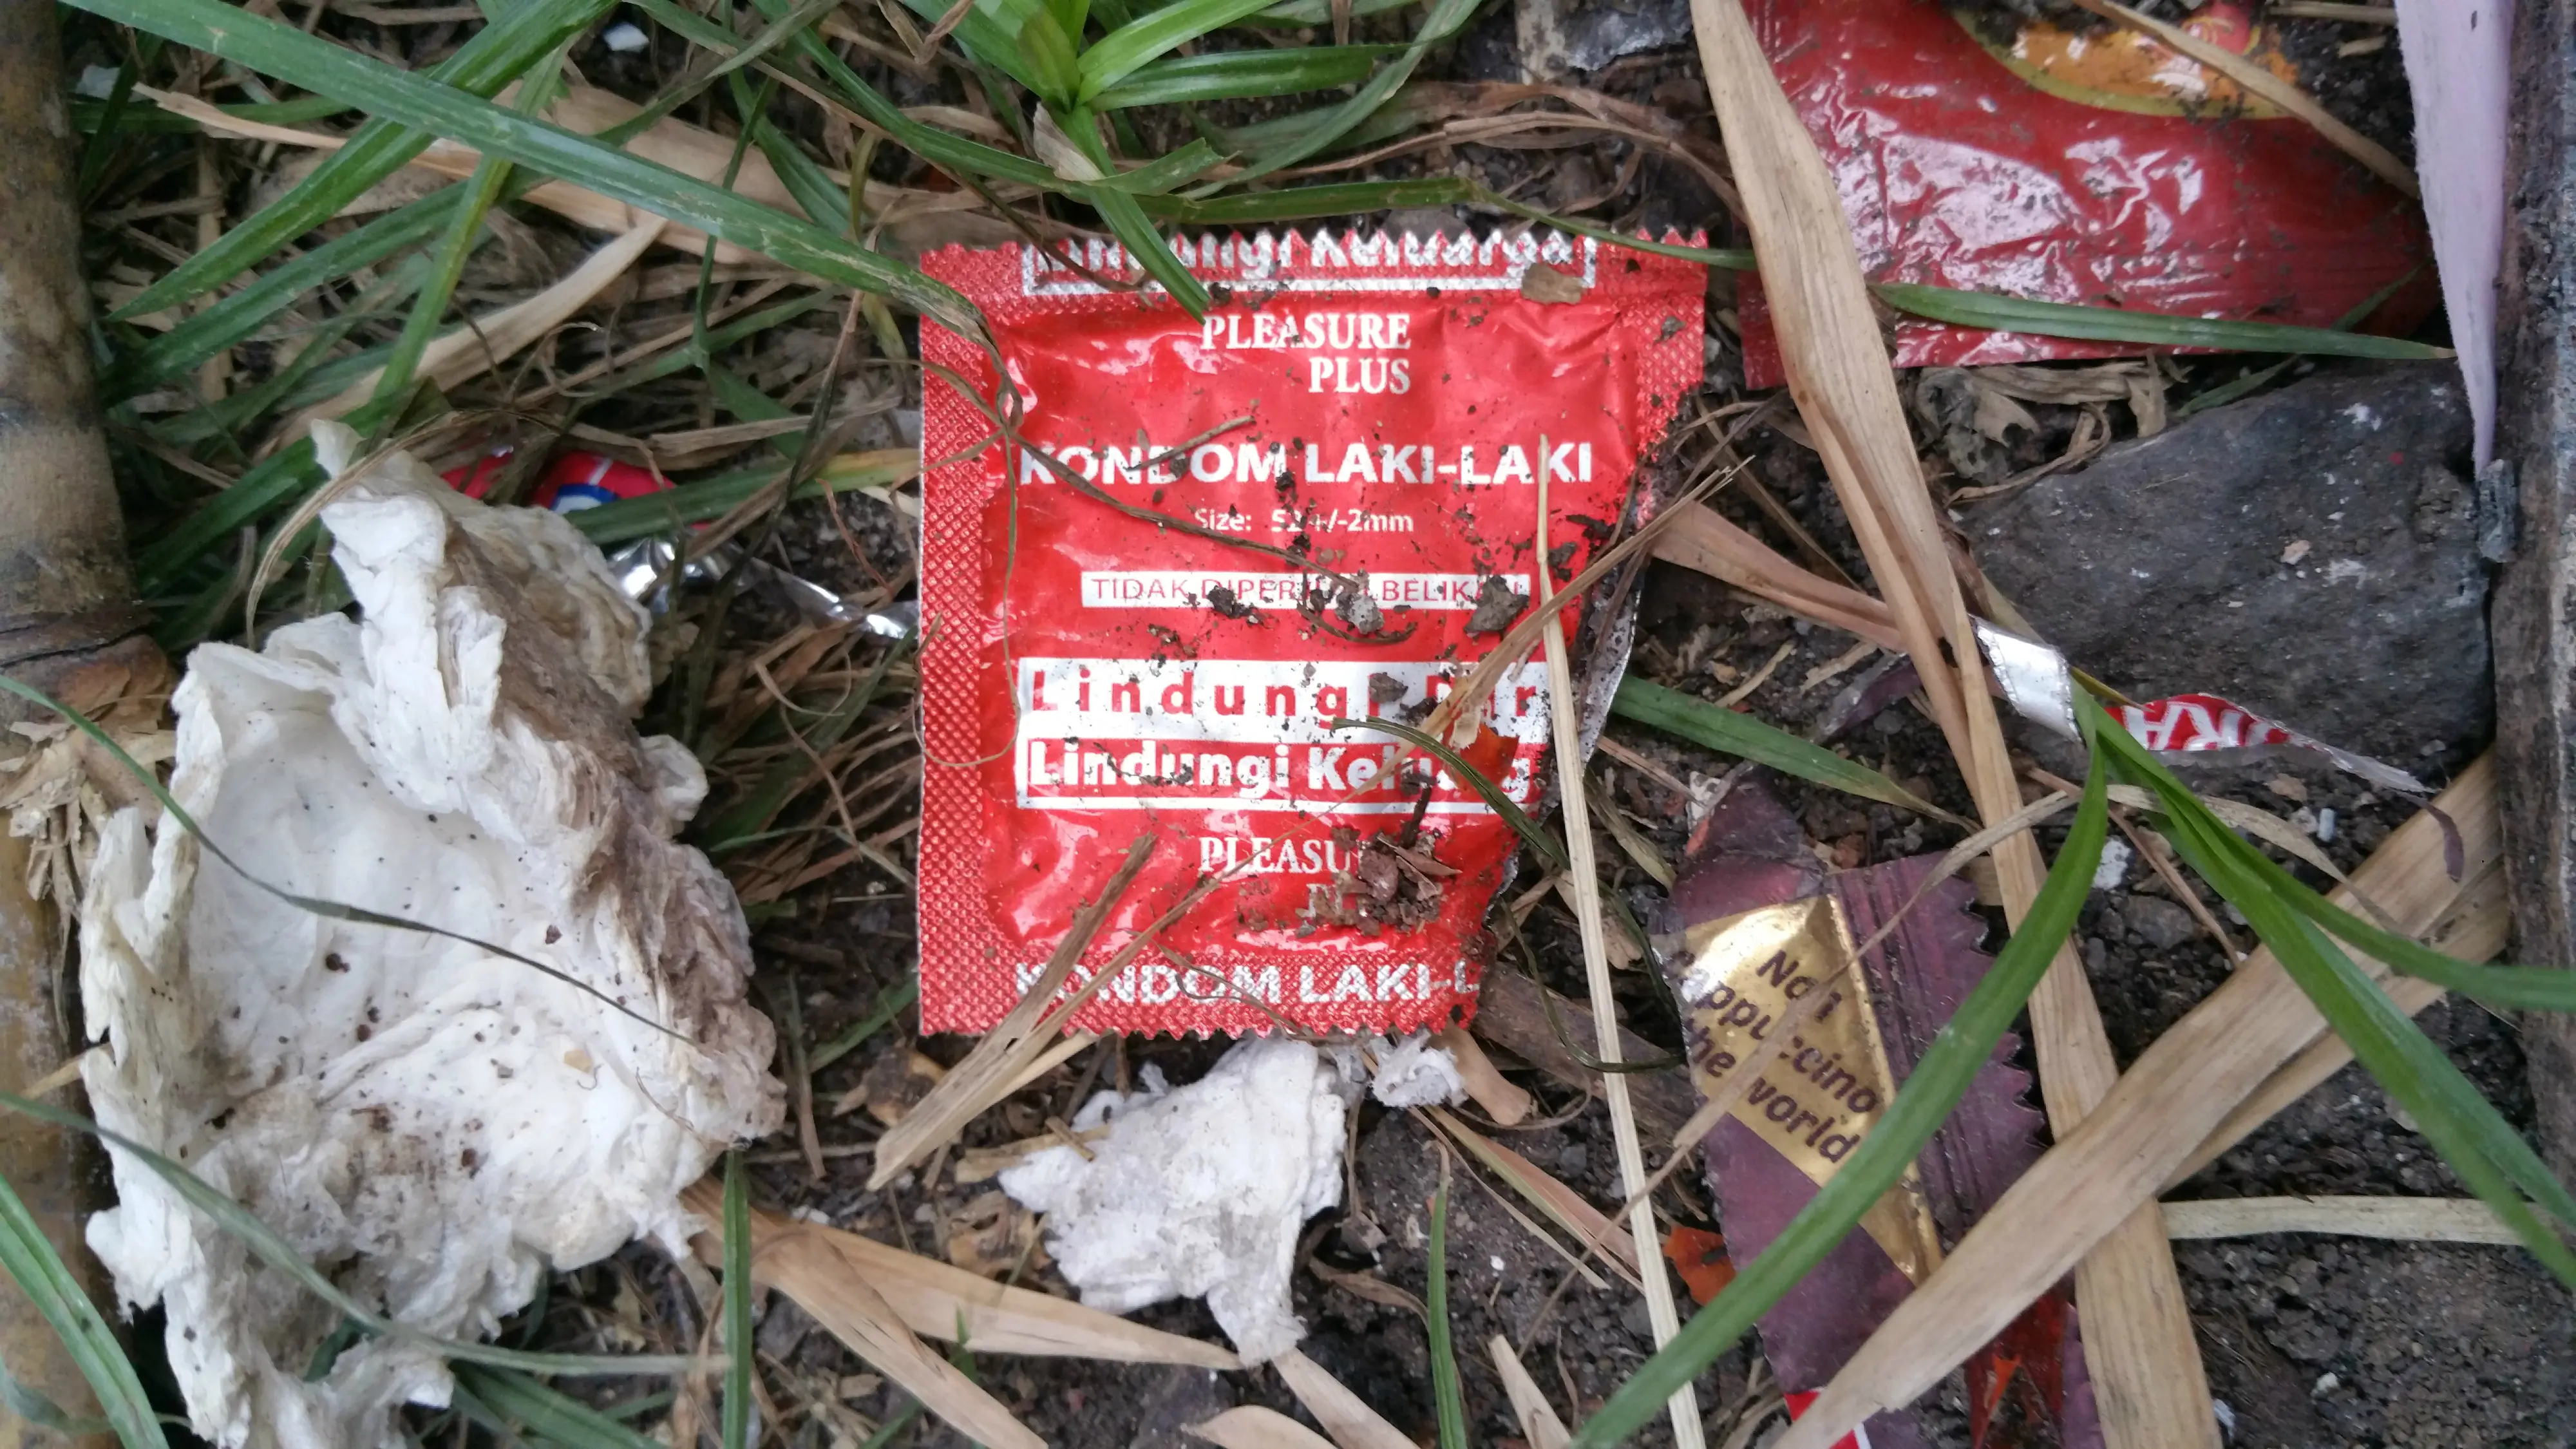 Tempat sampah depan bangunan diduga tempat pesta seks gay di Kelapa Gading banyak berserakan sampah bungkus kondom. (Liputan6.com/Nanda Perdana Putra)